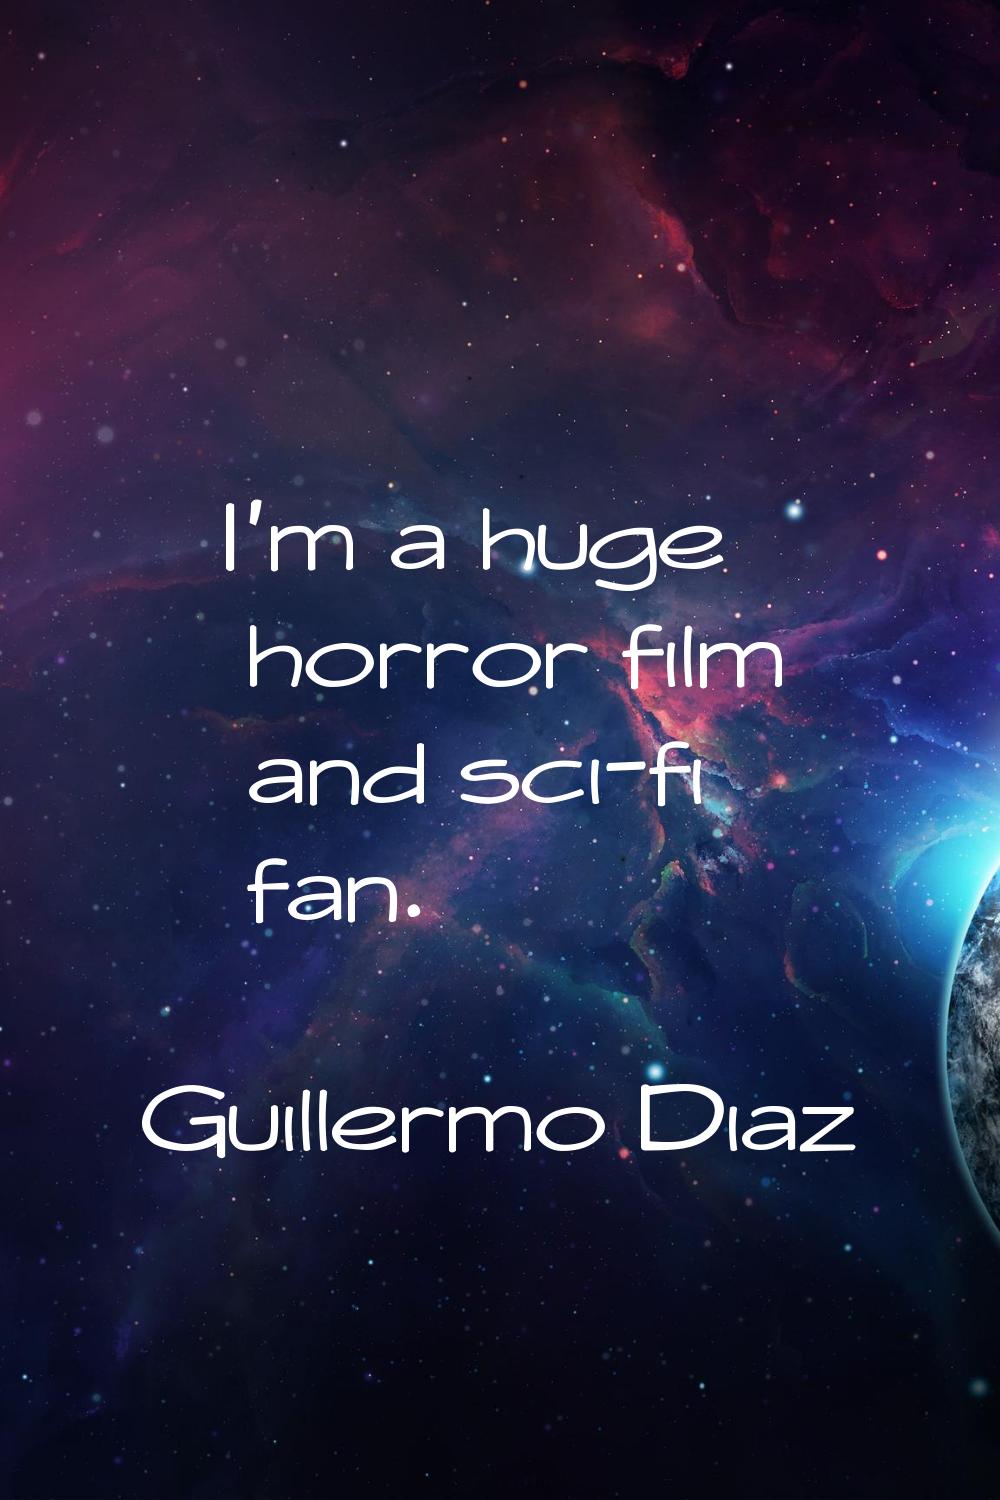 I'm a huge horror film and sci-fi fan.